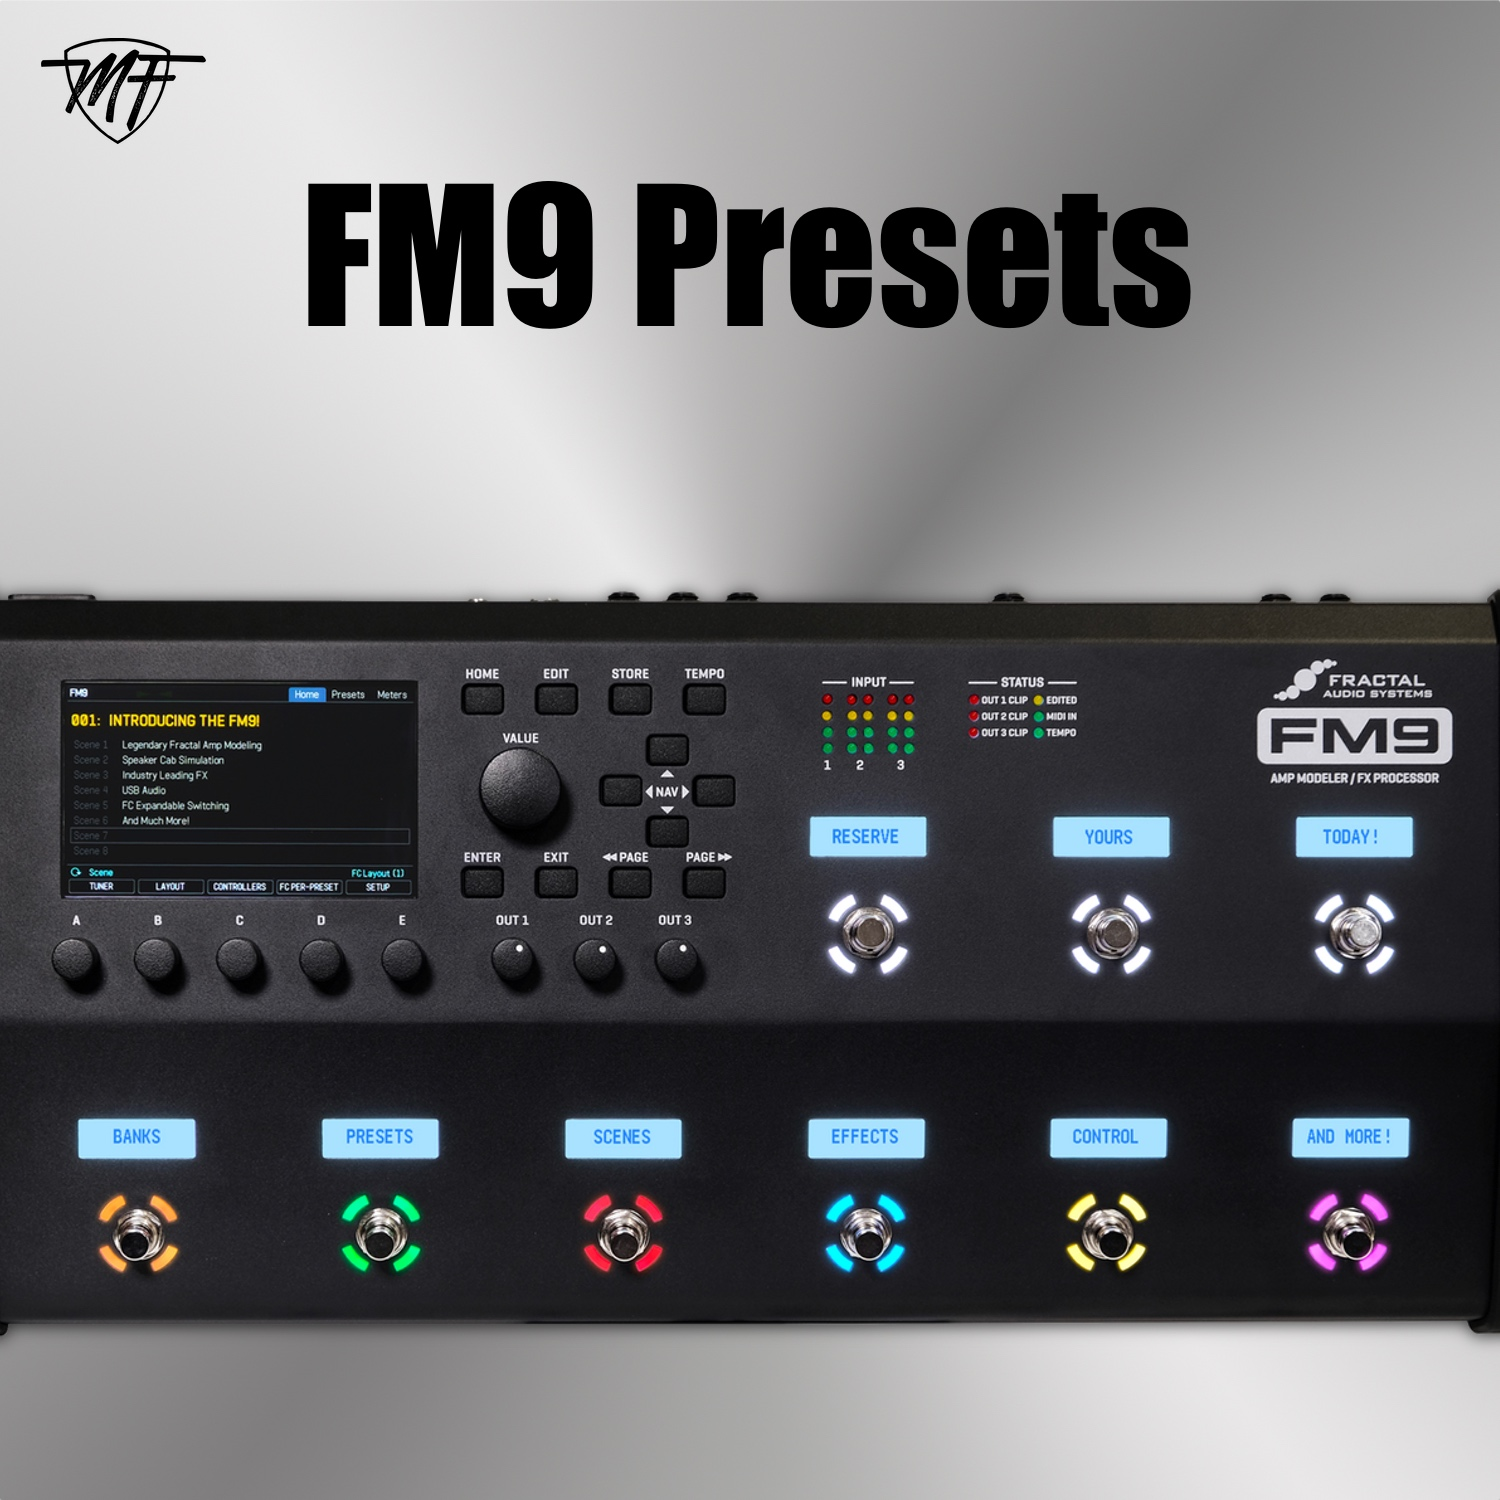 FM9 Presets